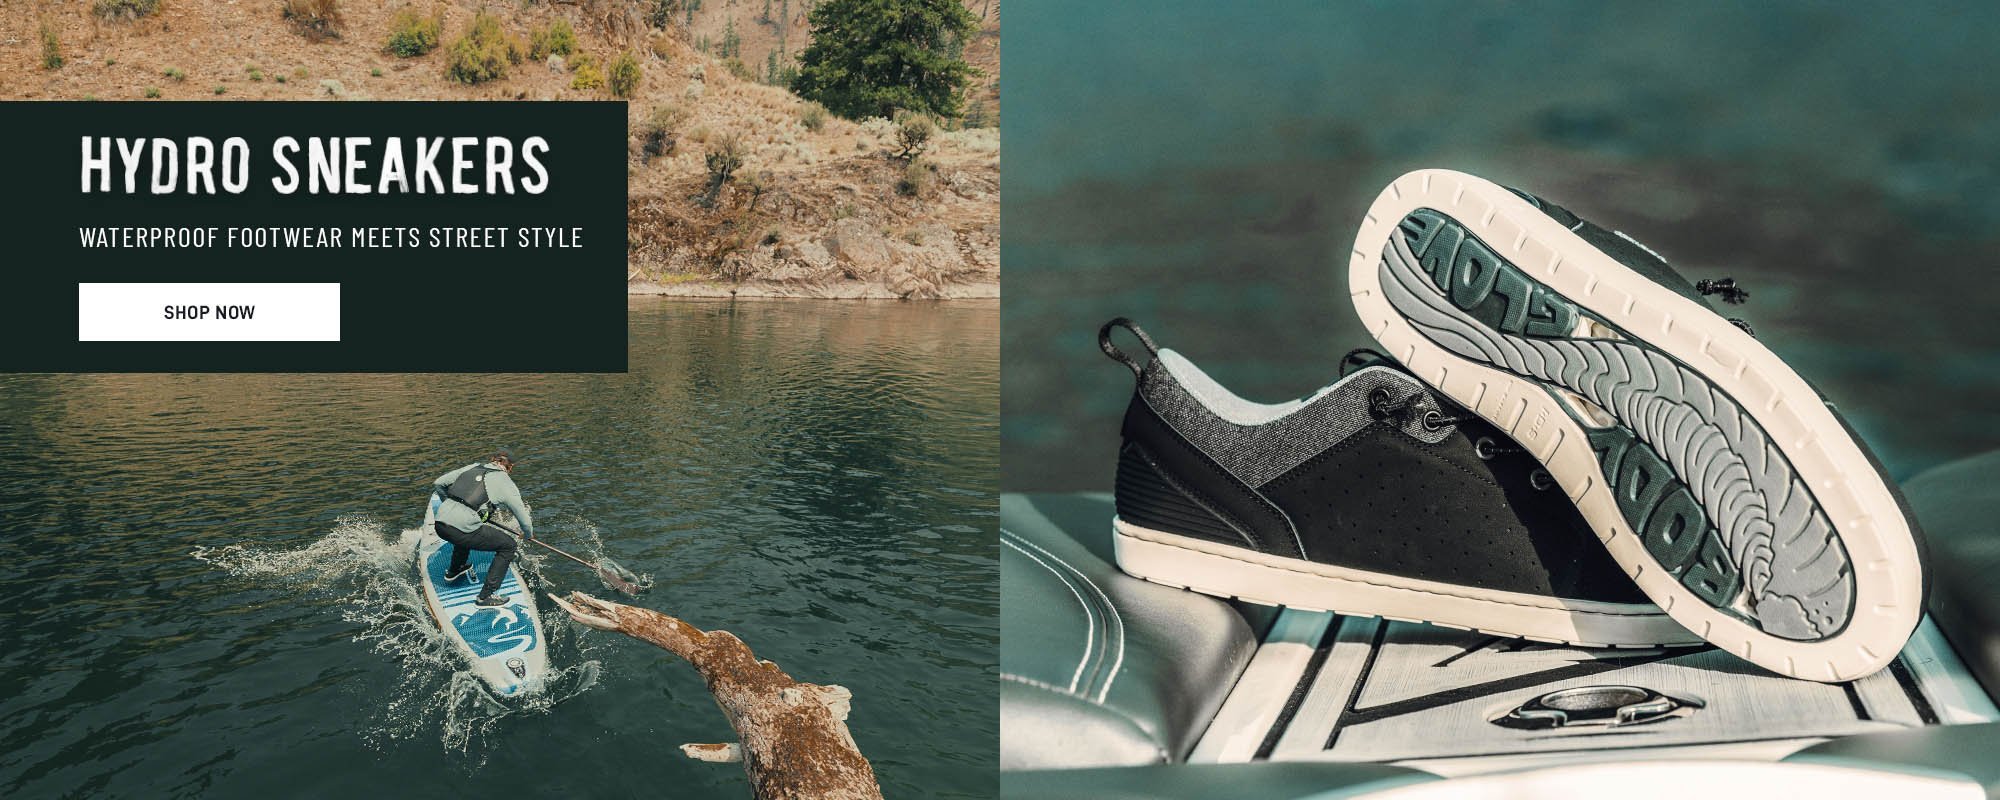 Hydro Sneakers - waterproof footwear meets street style - Shop Now